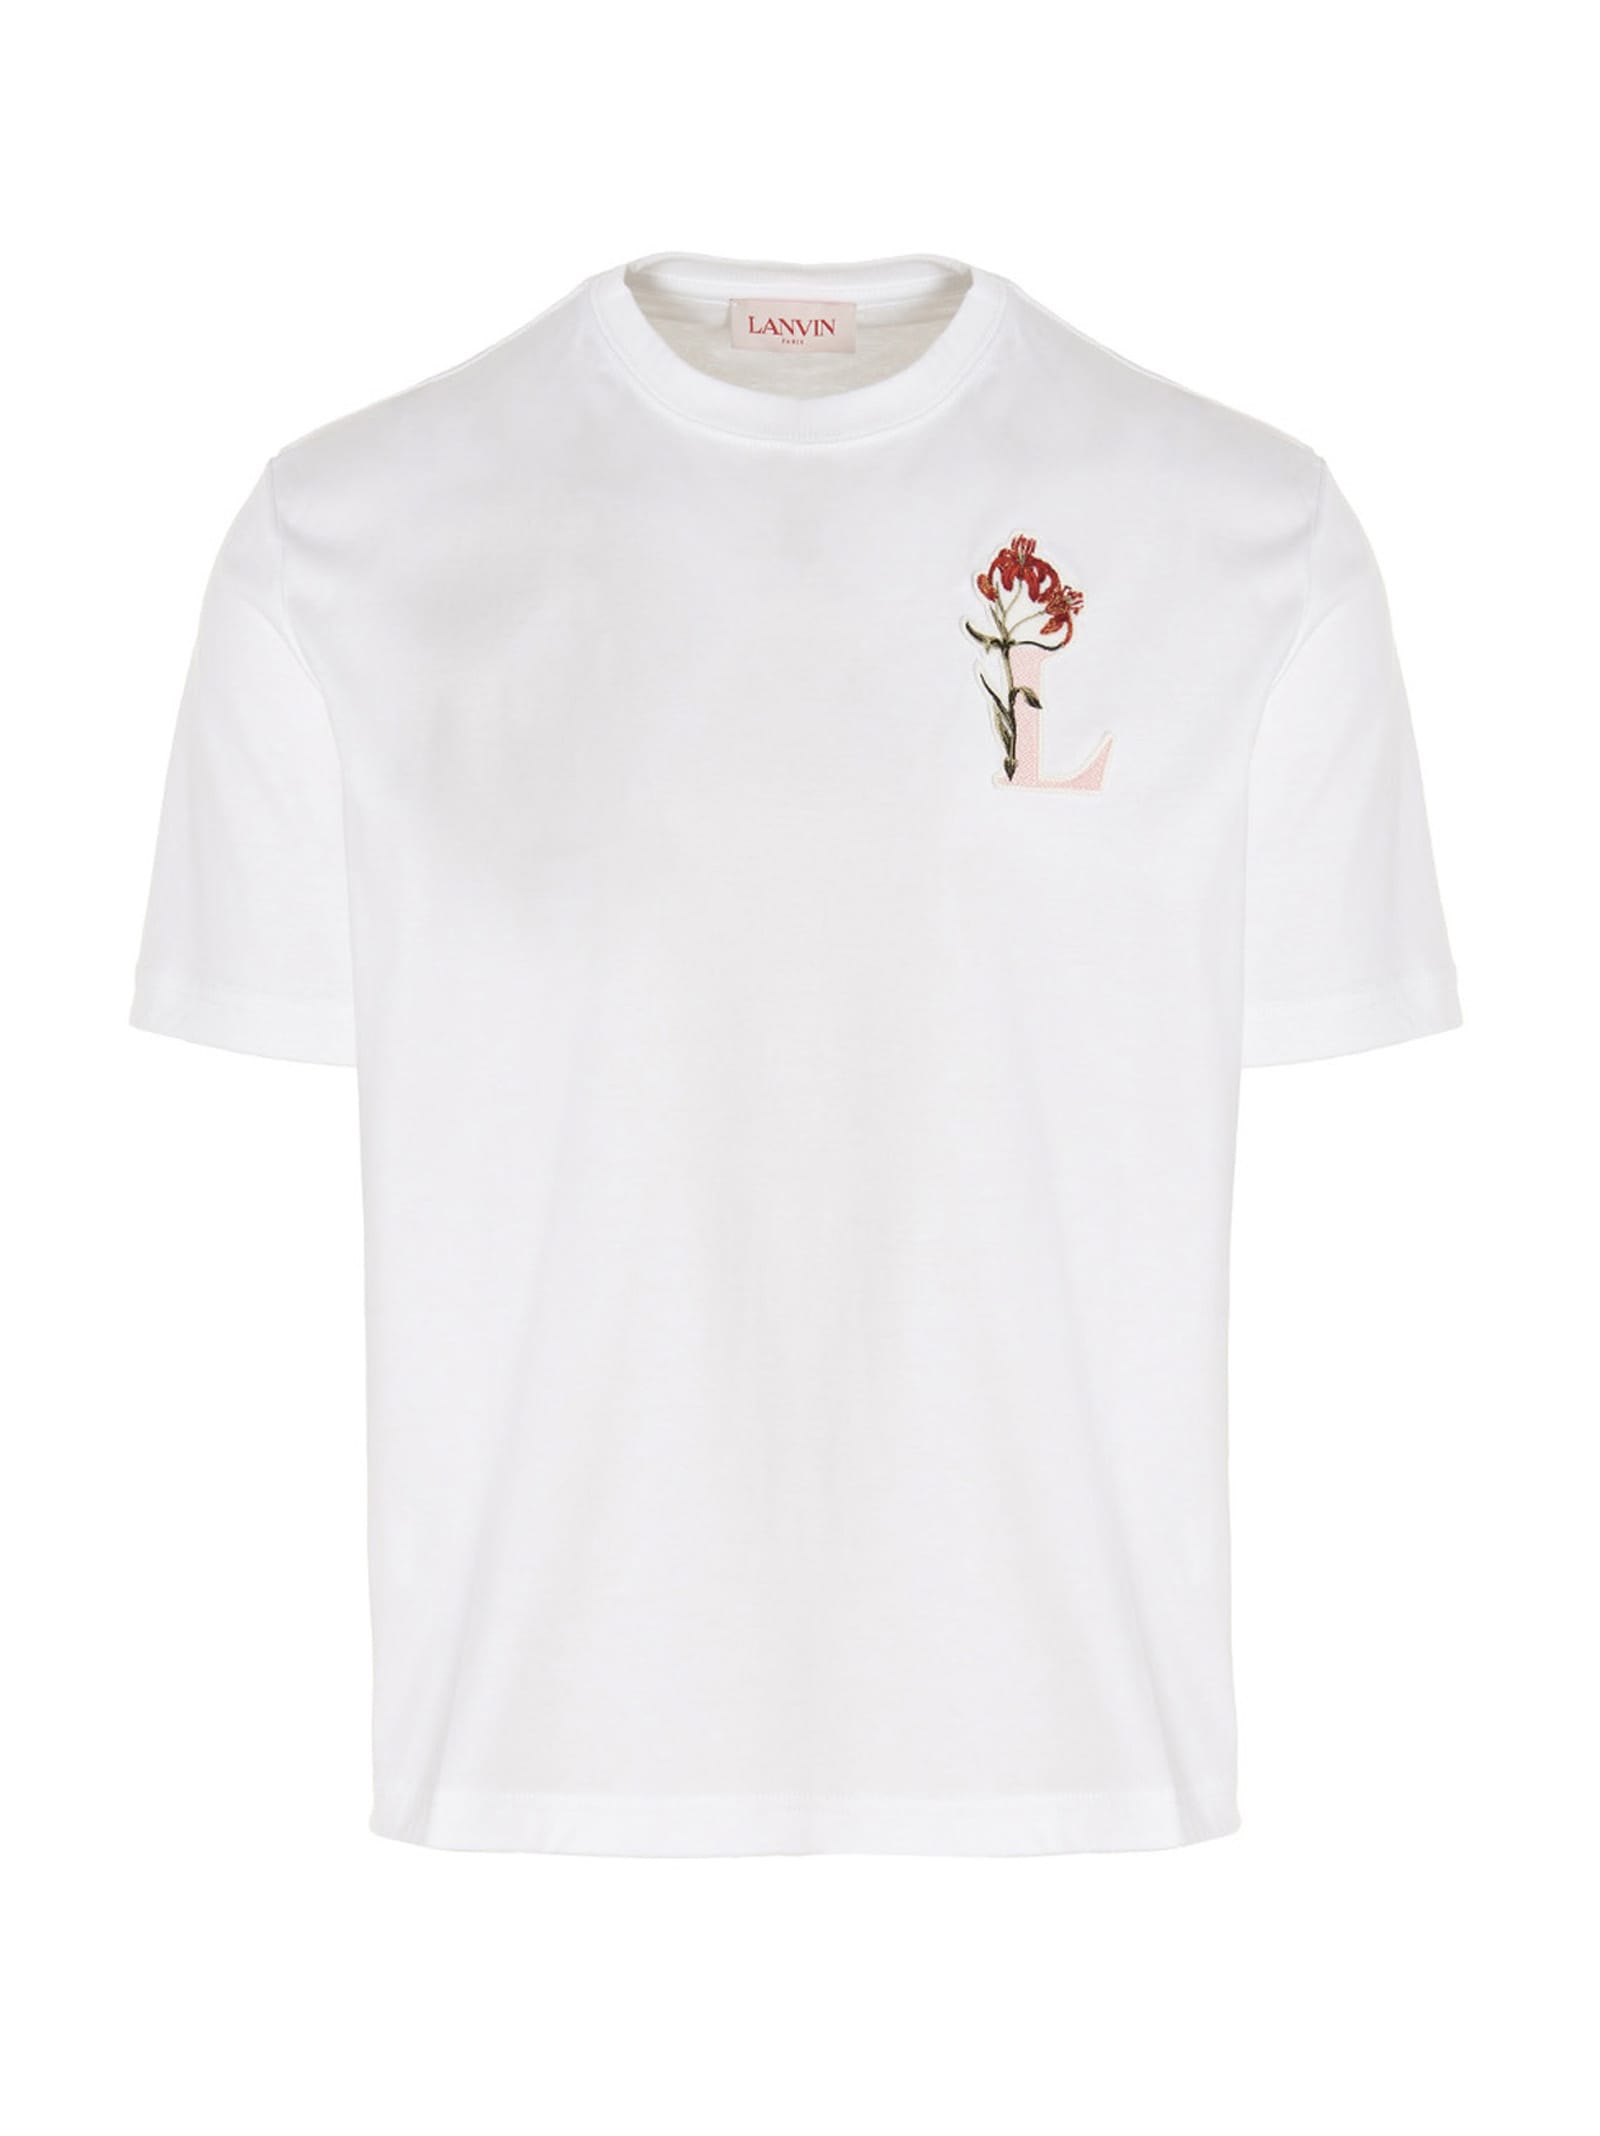 Lanvin botanica T-shirt